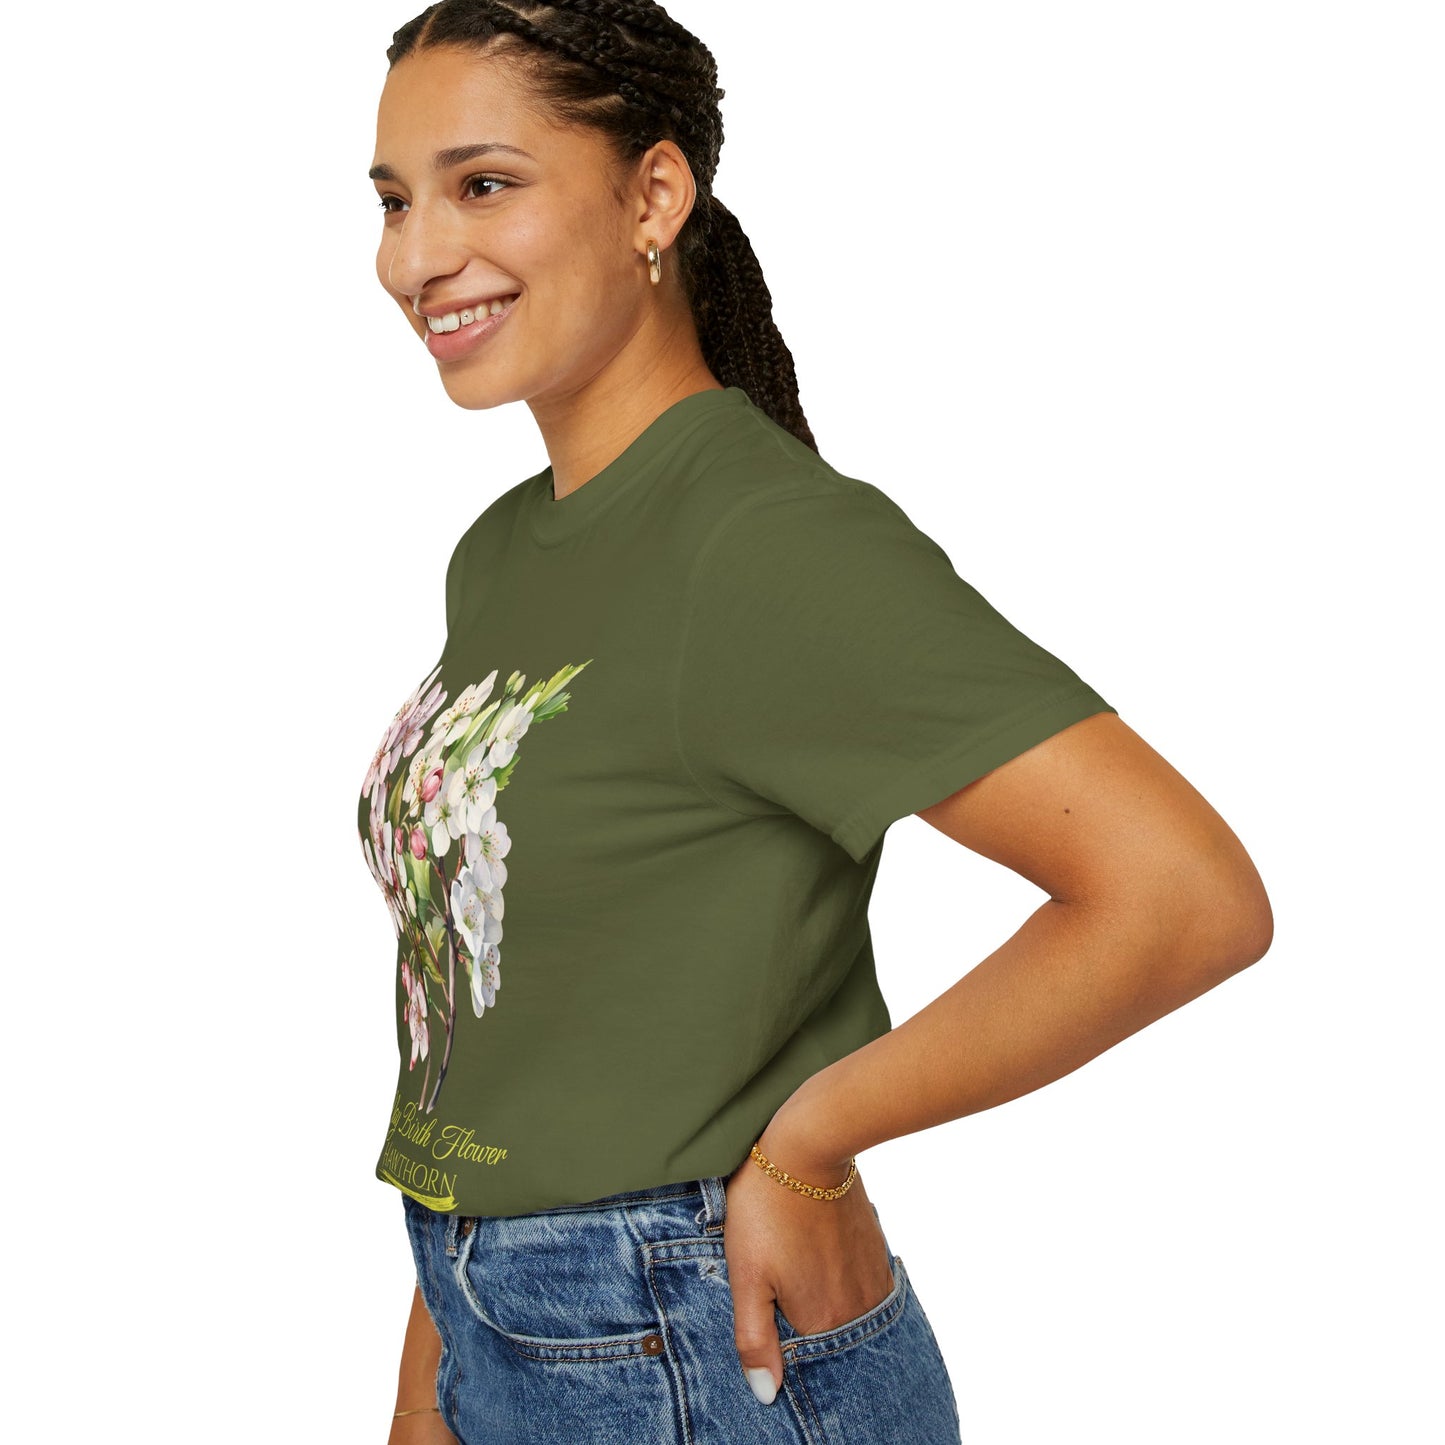 May Birth Flower "Hawthorn" (For Dark Fabric) - Unisex Garment-Dyed T-shirt